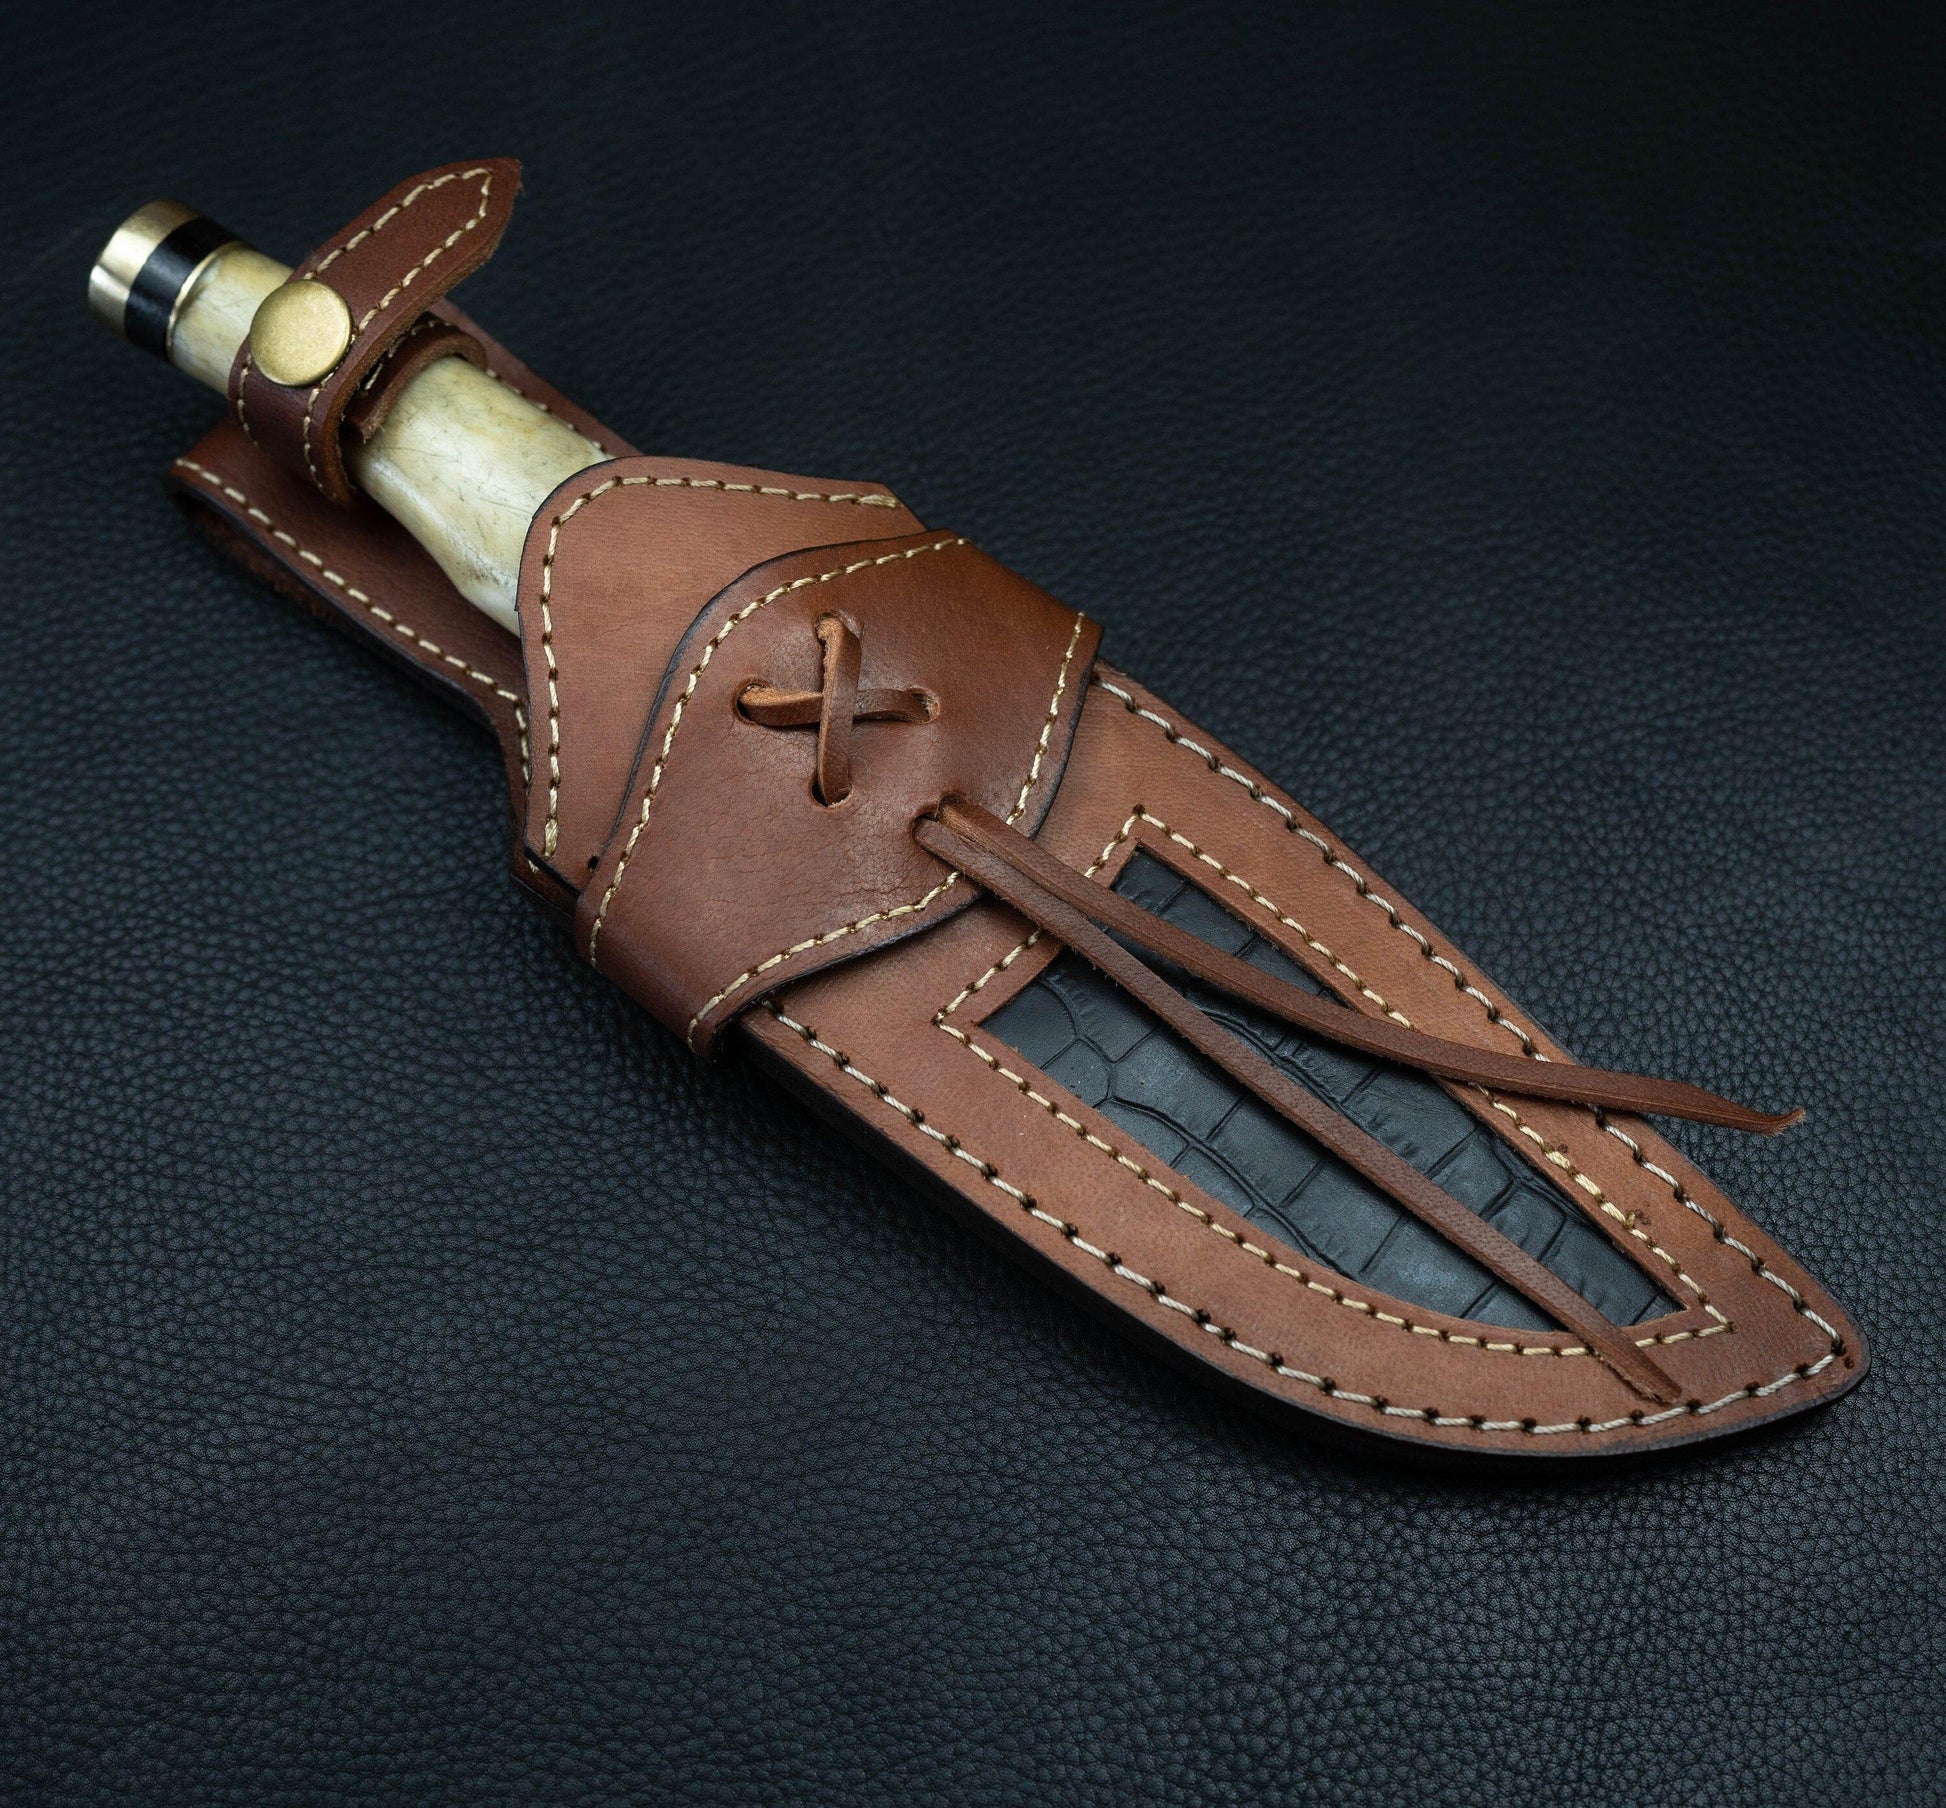 10inch Custom Handmade Forged Damascus Steel Hunting Bowie Knife Fixed Blade  Diamond Wood Handle W/leather Sheath Full Tang 